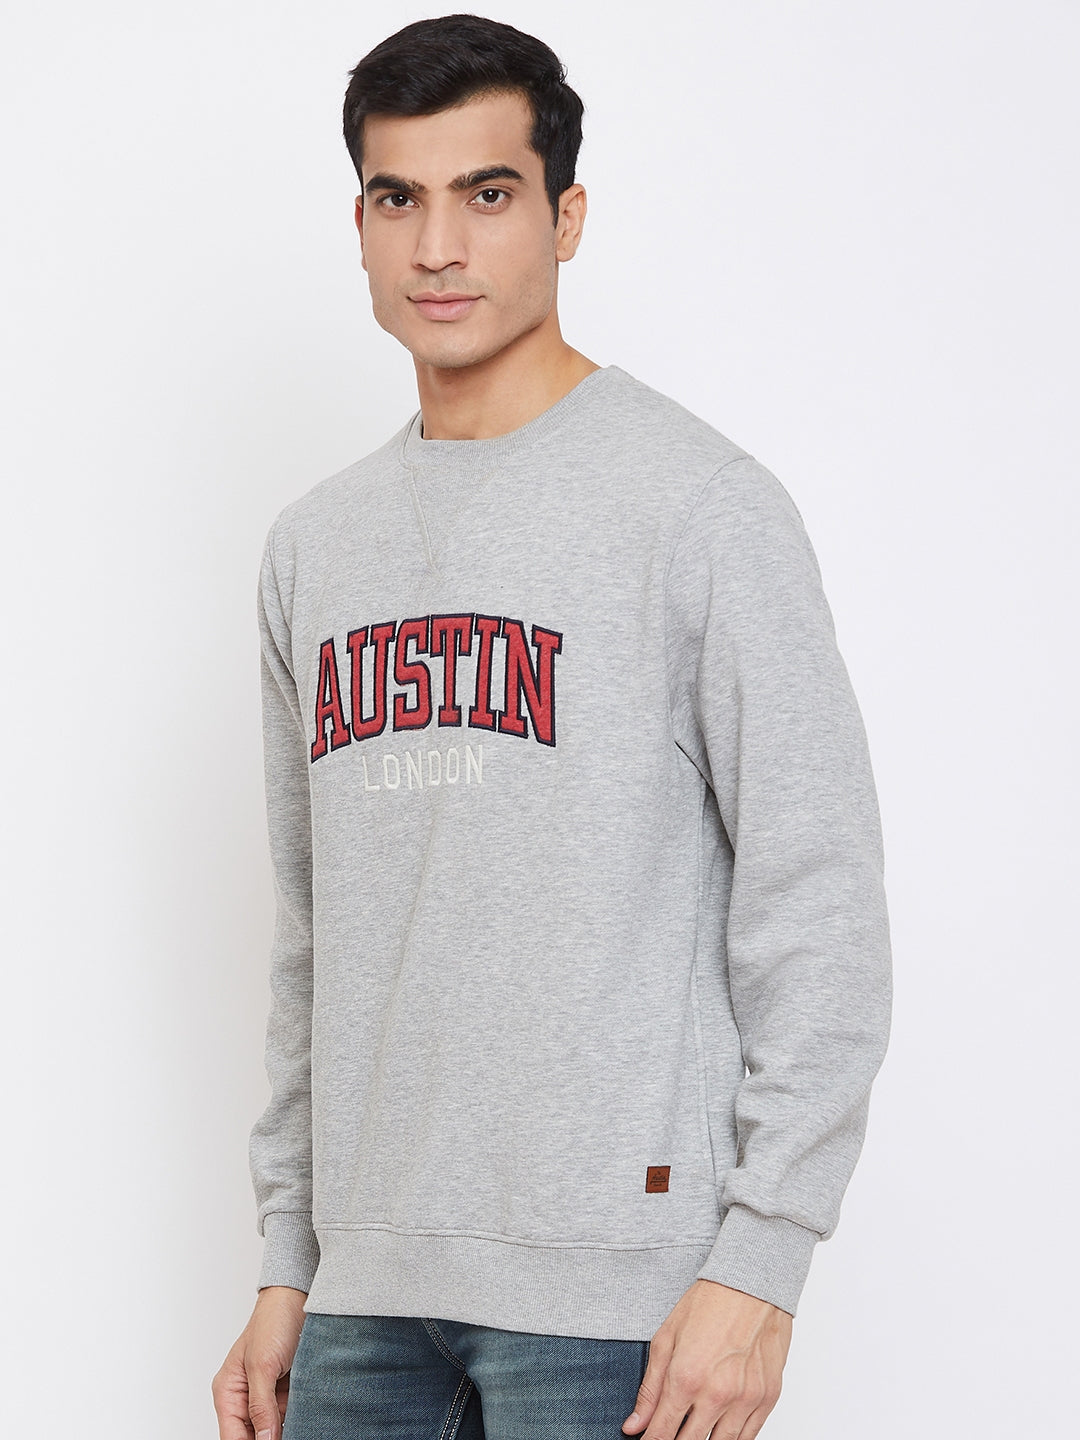 Austin Wood Men's Grey Full Sleeves Solid Round Neck Sweatshirt